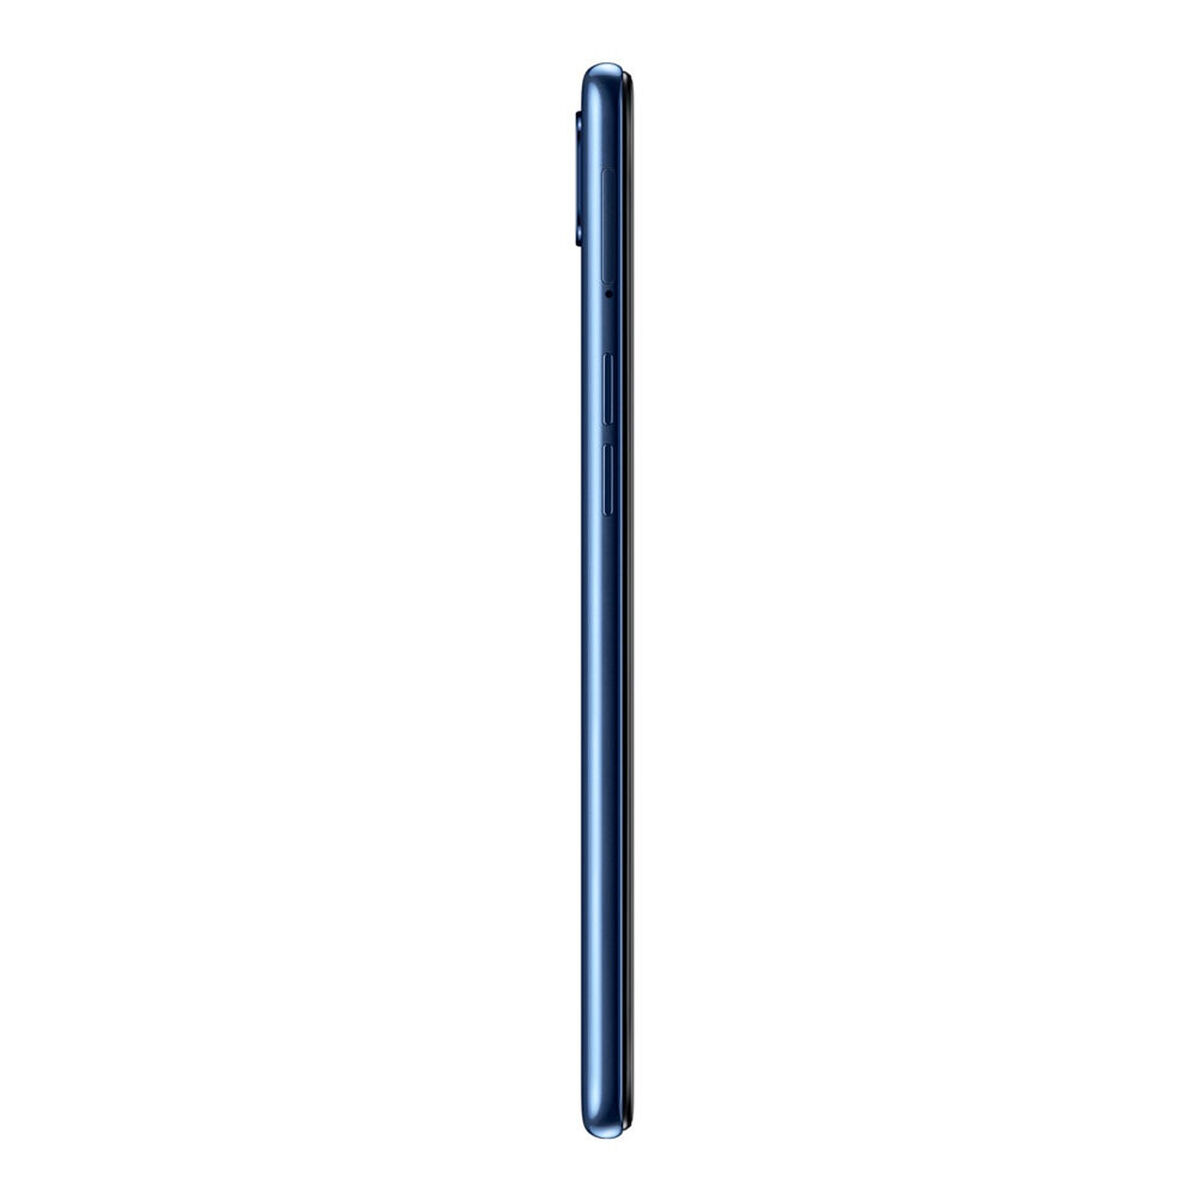 Celular Samsung Galaxy A10s 32GB 6,2" Azul WOM